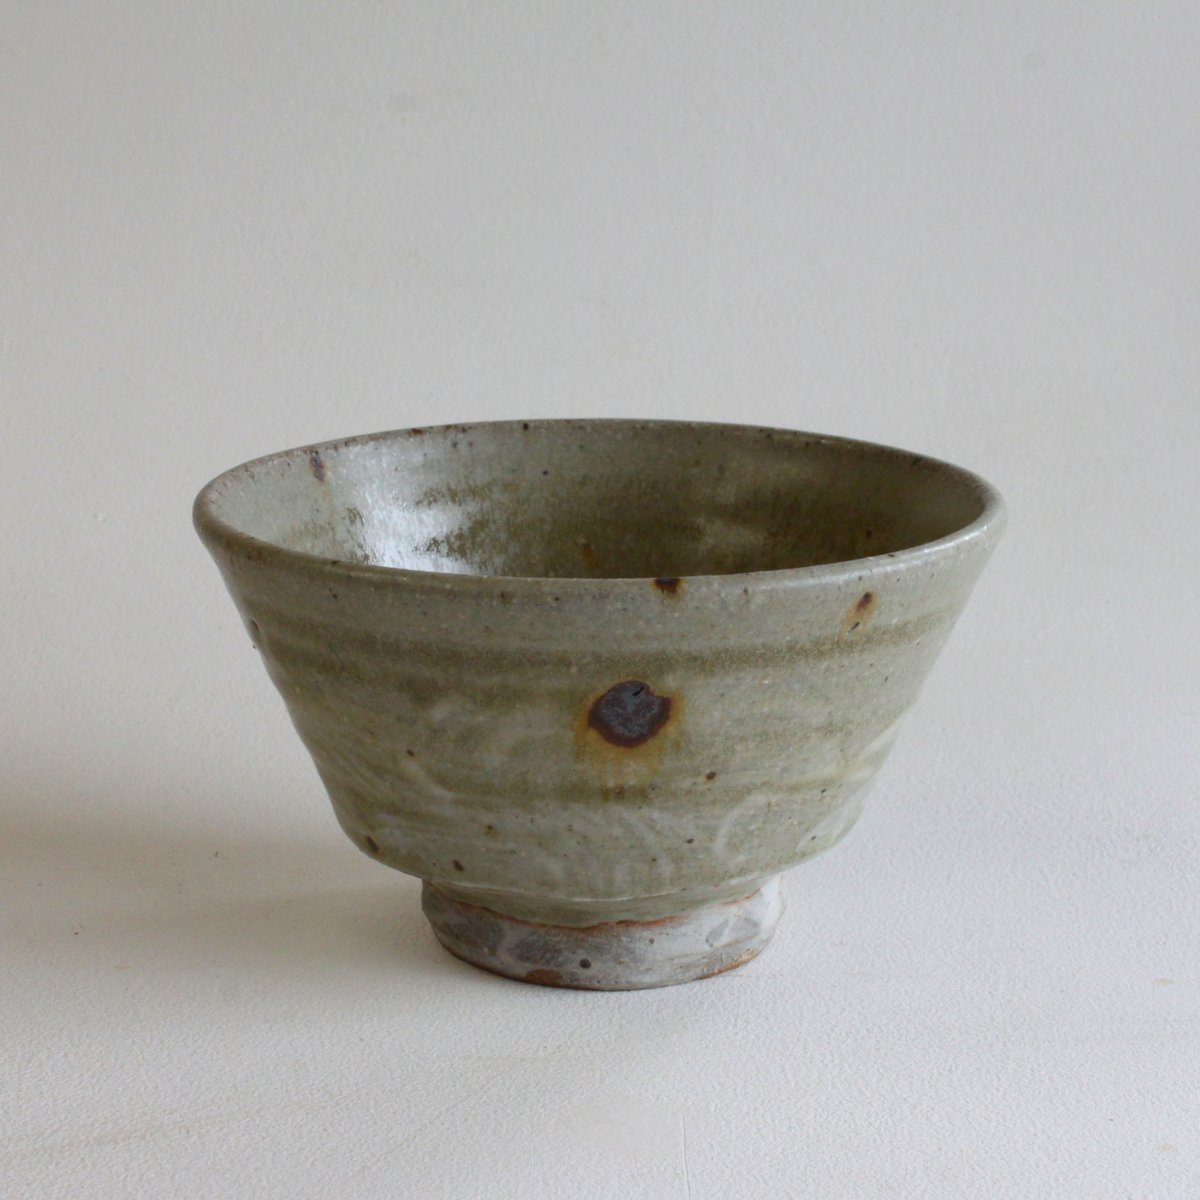 Image of brushed Slip and Ash glazed Footed Bowl